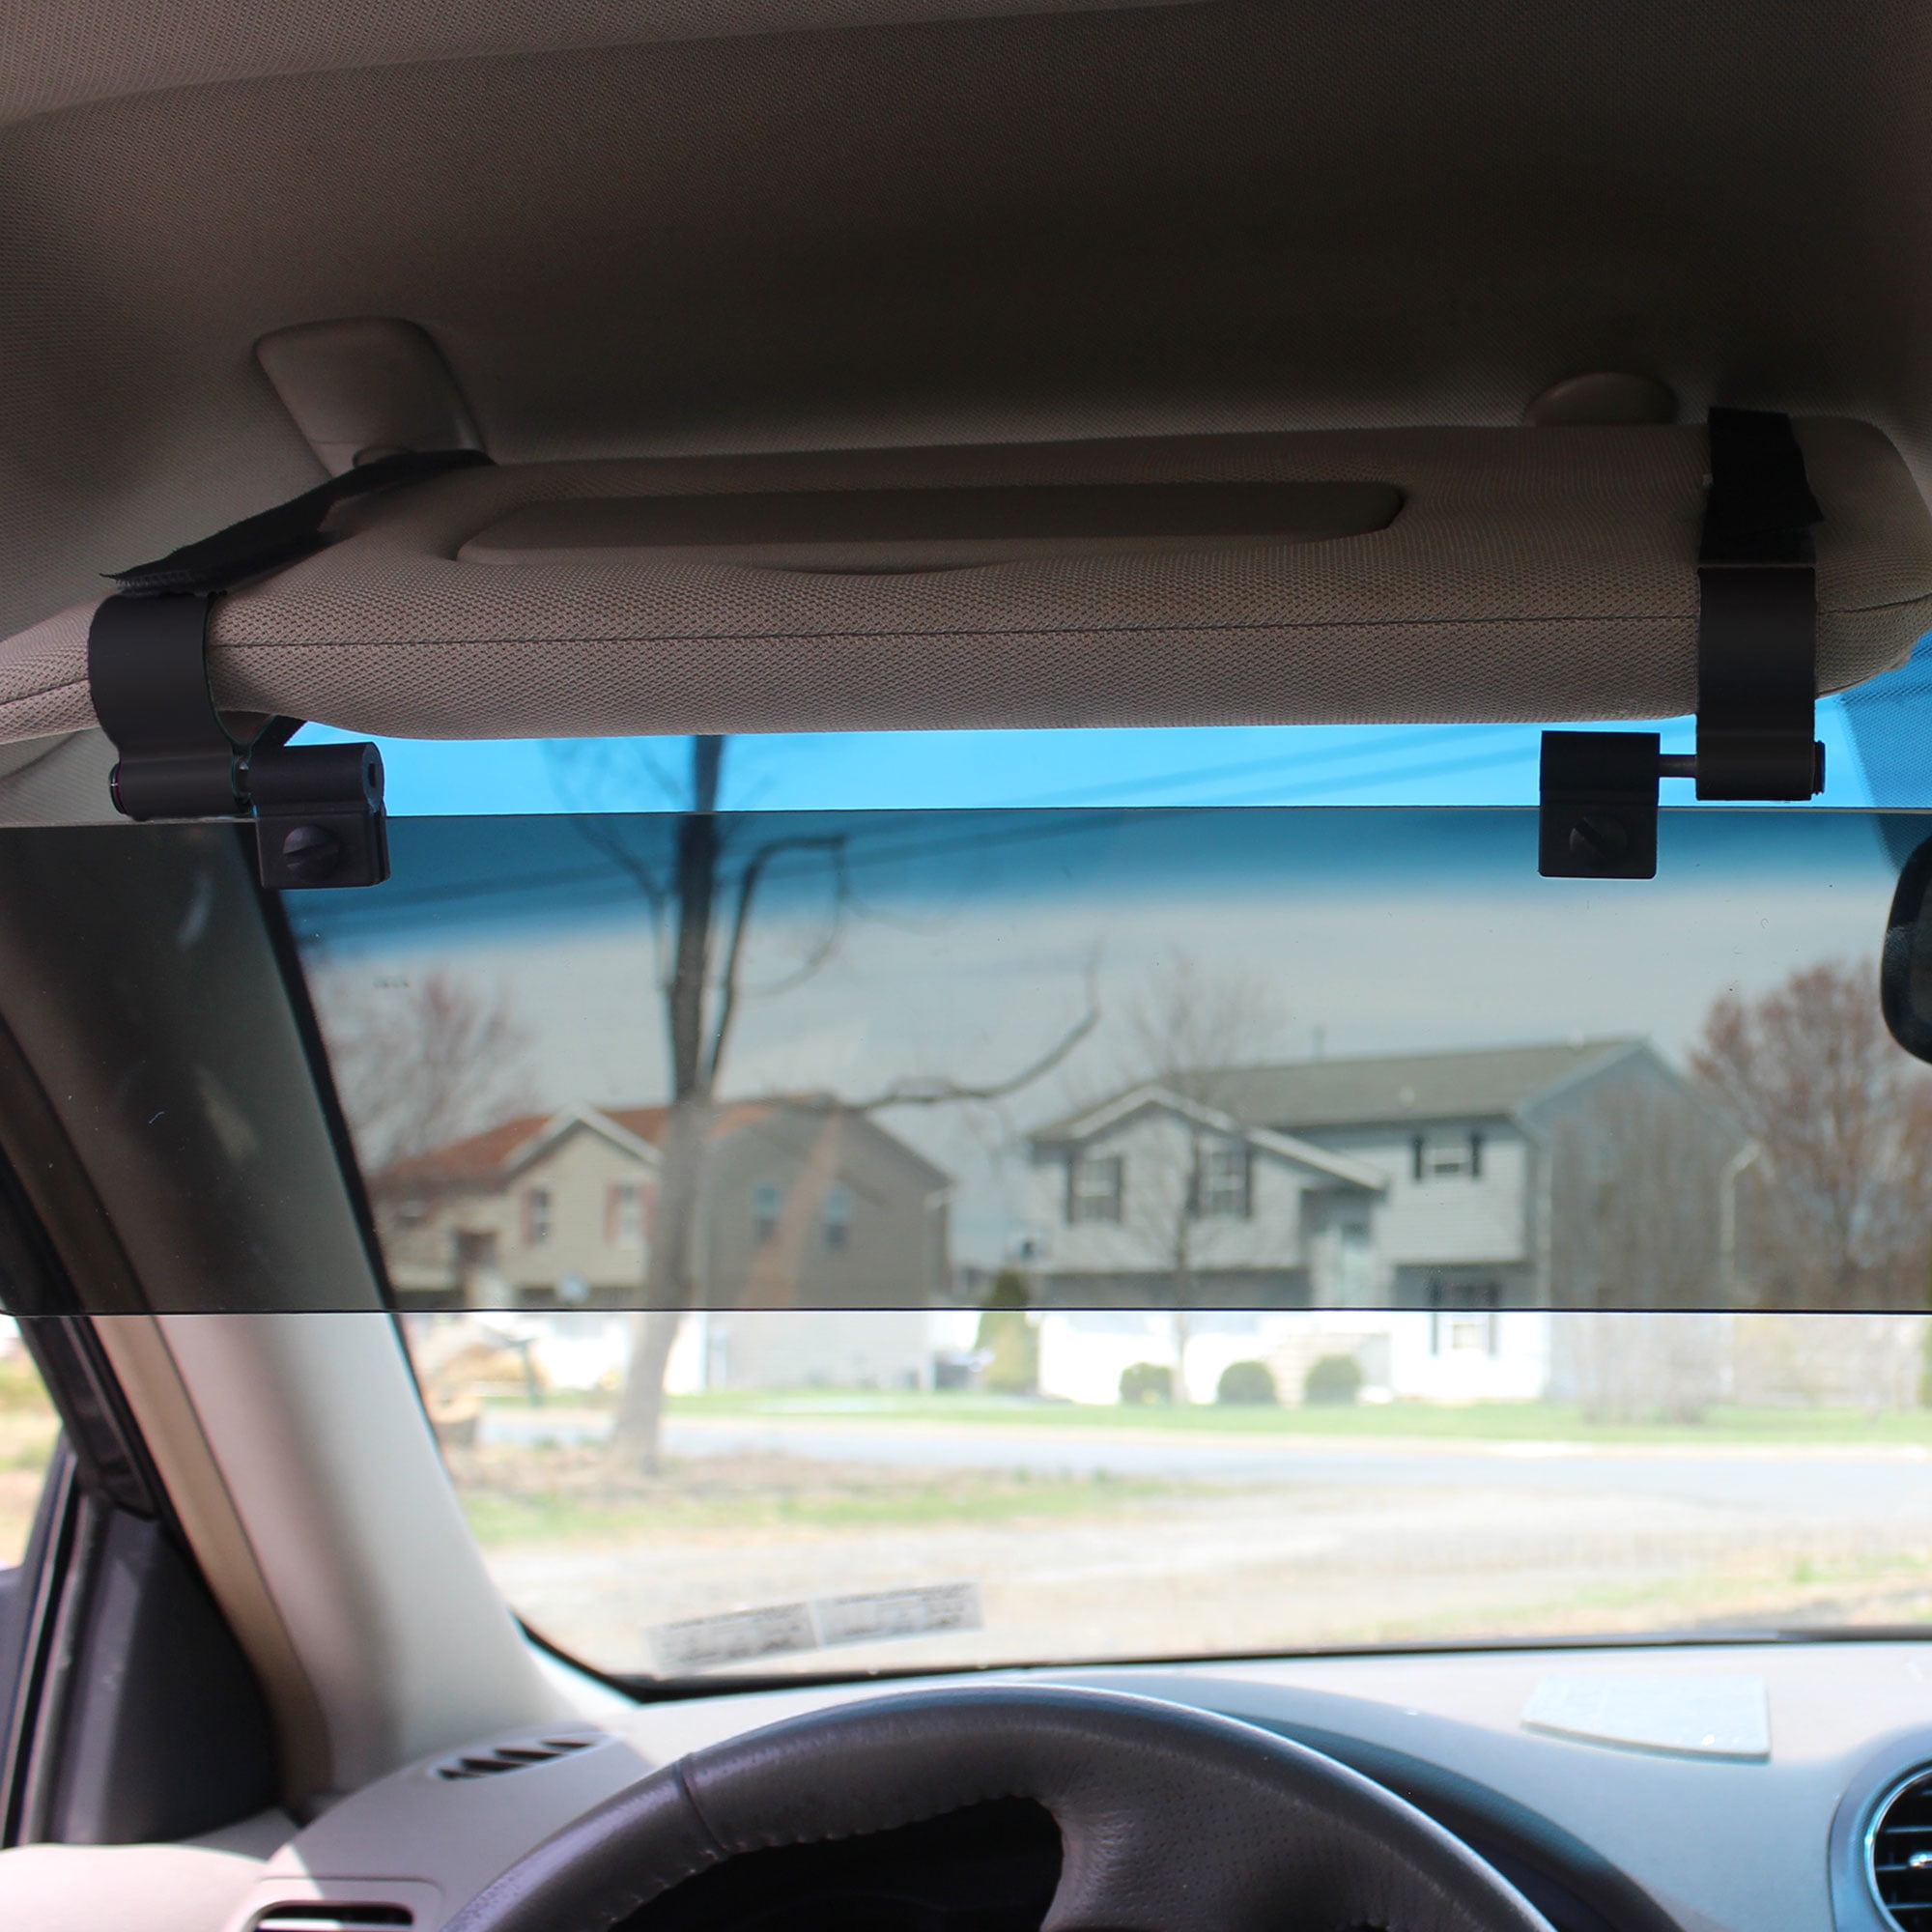 Anti Dazzle Car Visor Sun Visor Day and Night Glare Blocker Sunvisor Extension for Cars Reduce Glare from Sun Oncoming Headlights & Eye Protection 2 in 1 2019 New Visor 